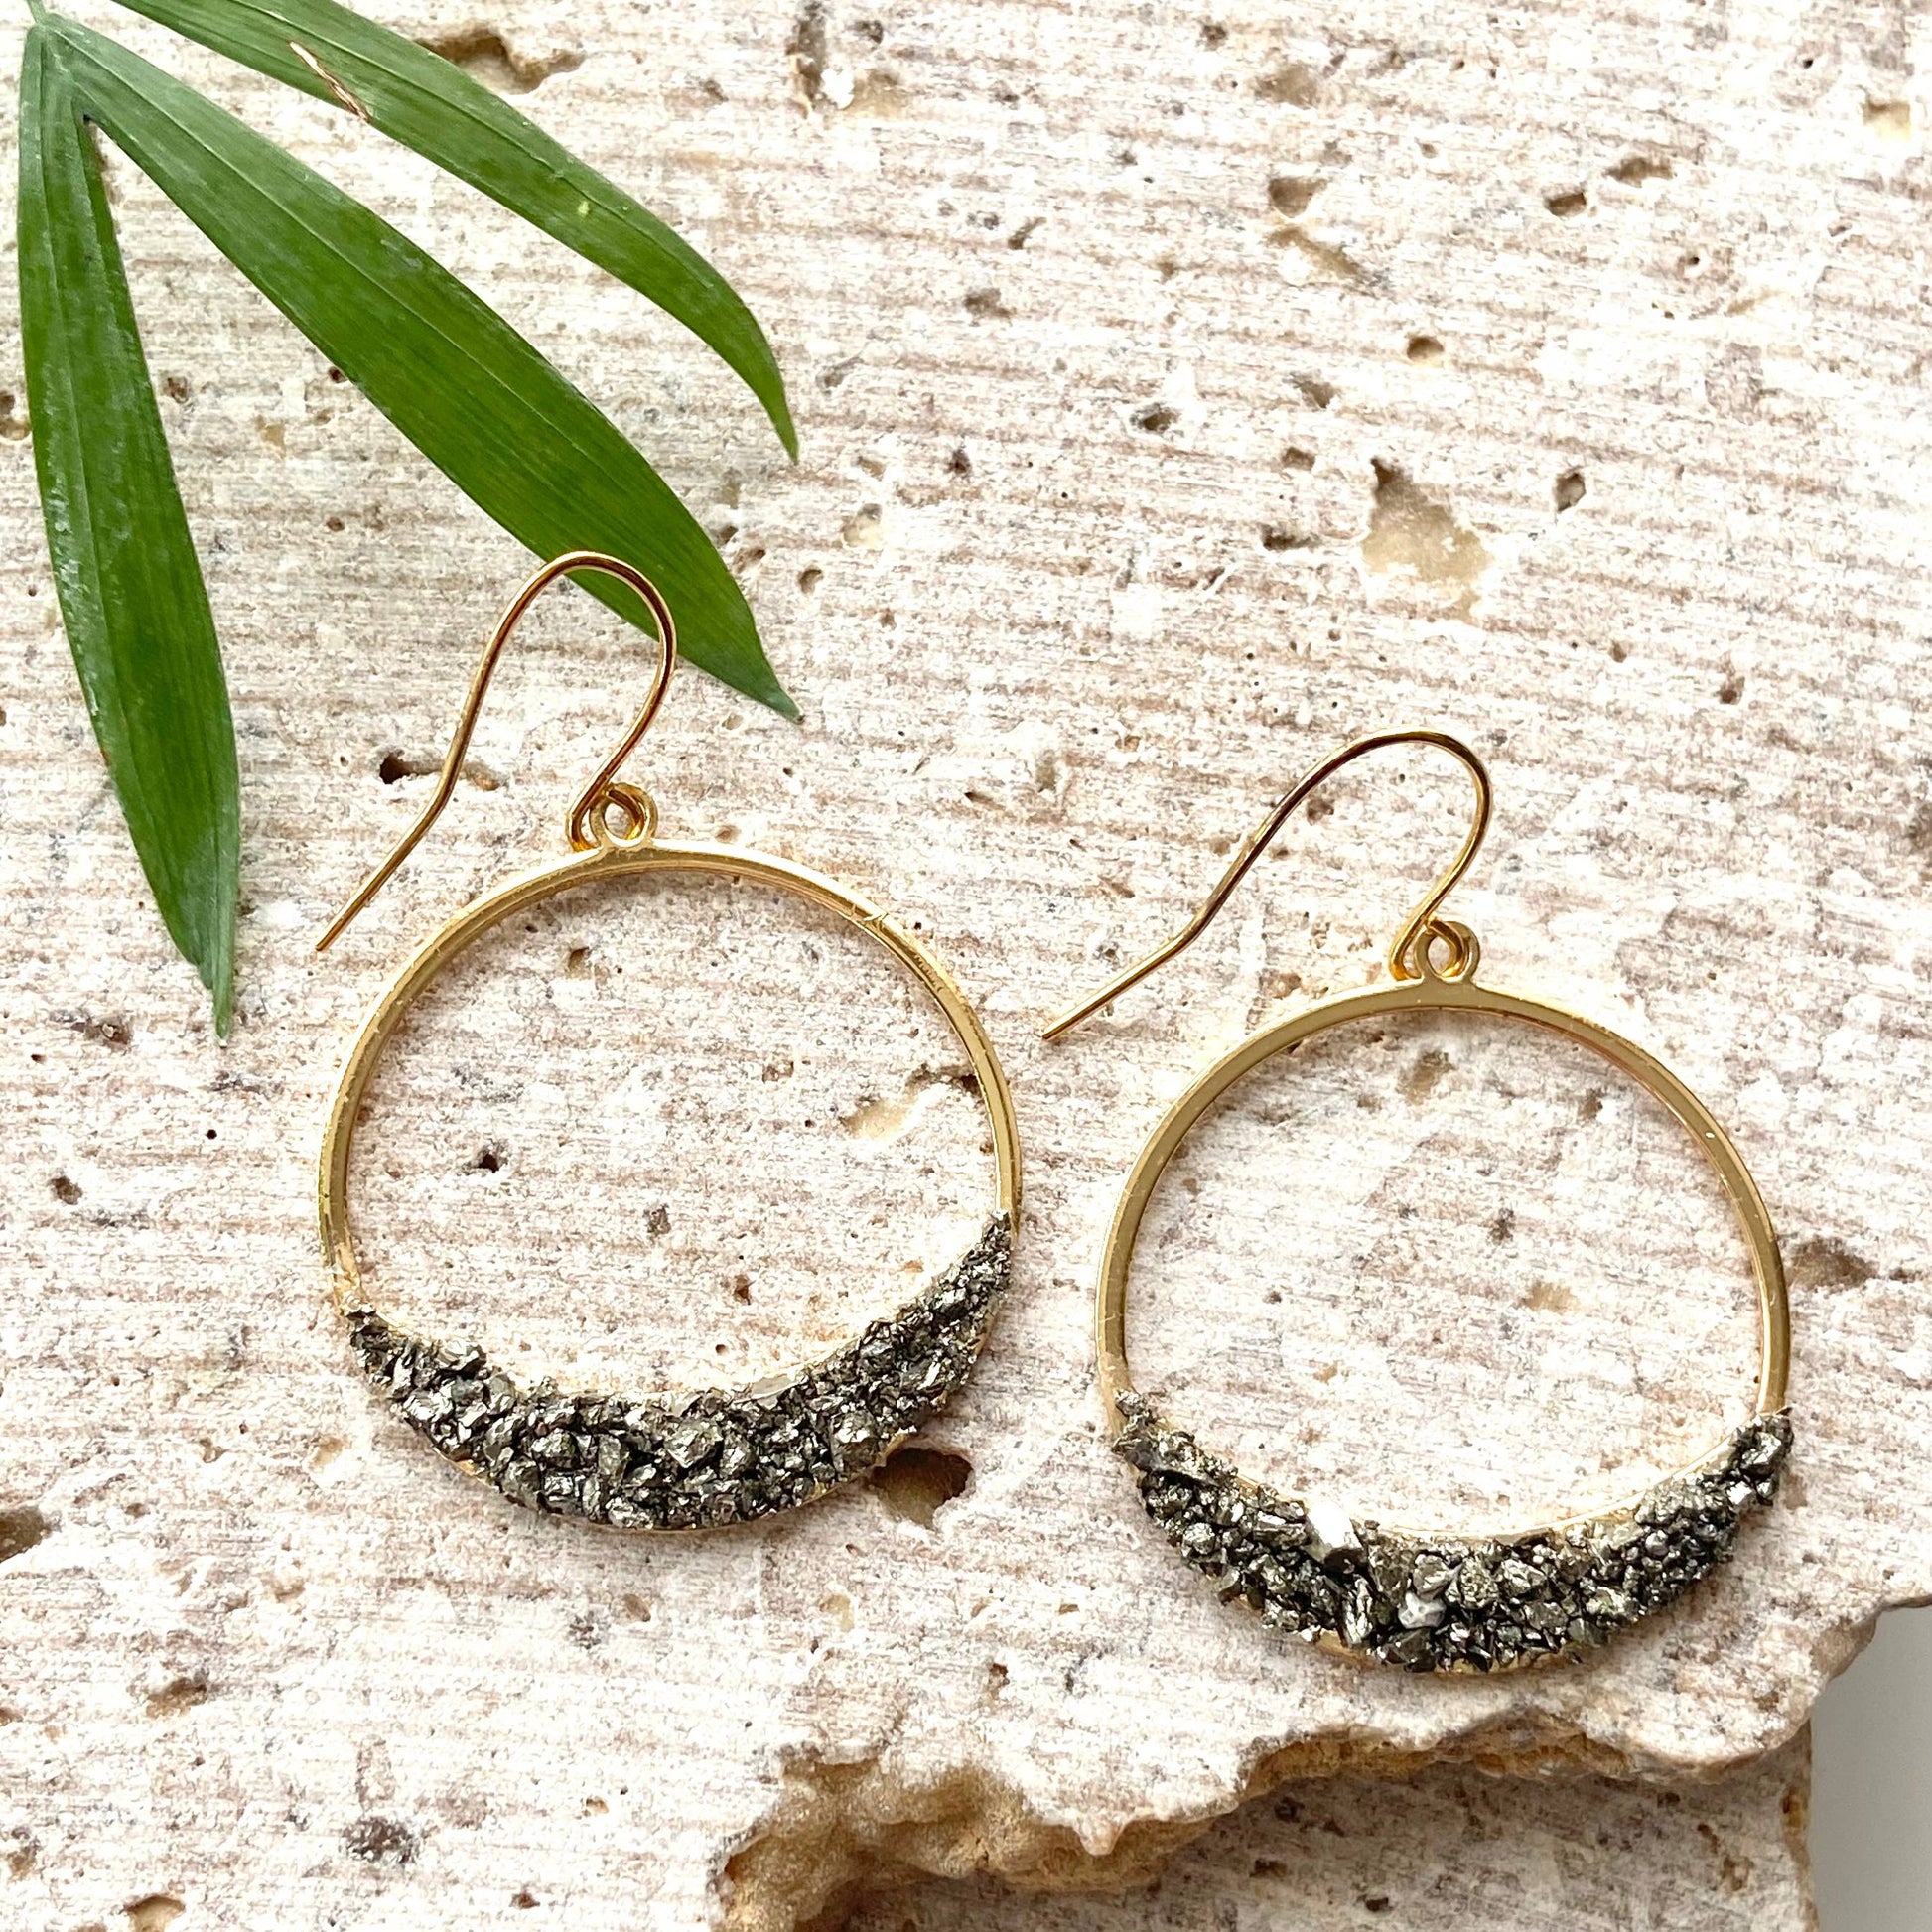 Handmade jewelry, boutique earrings salon spa jewelry pyrite